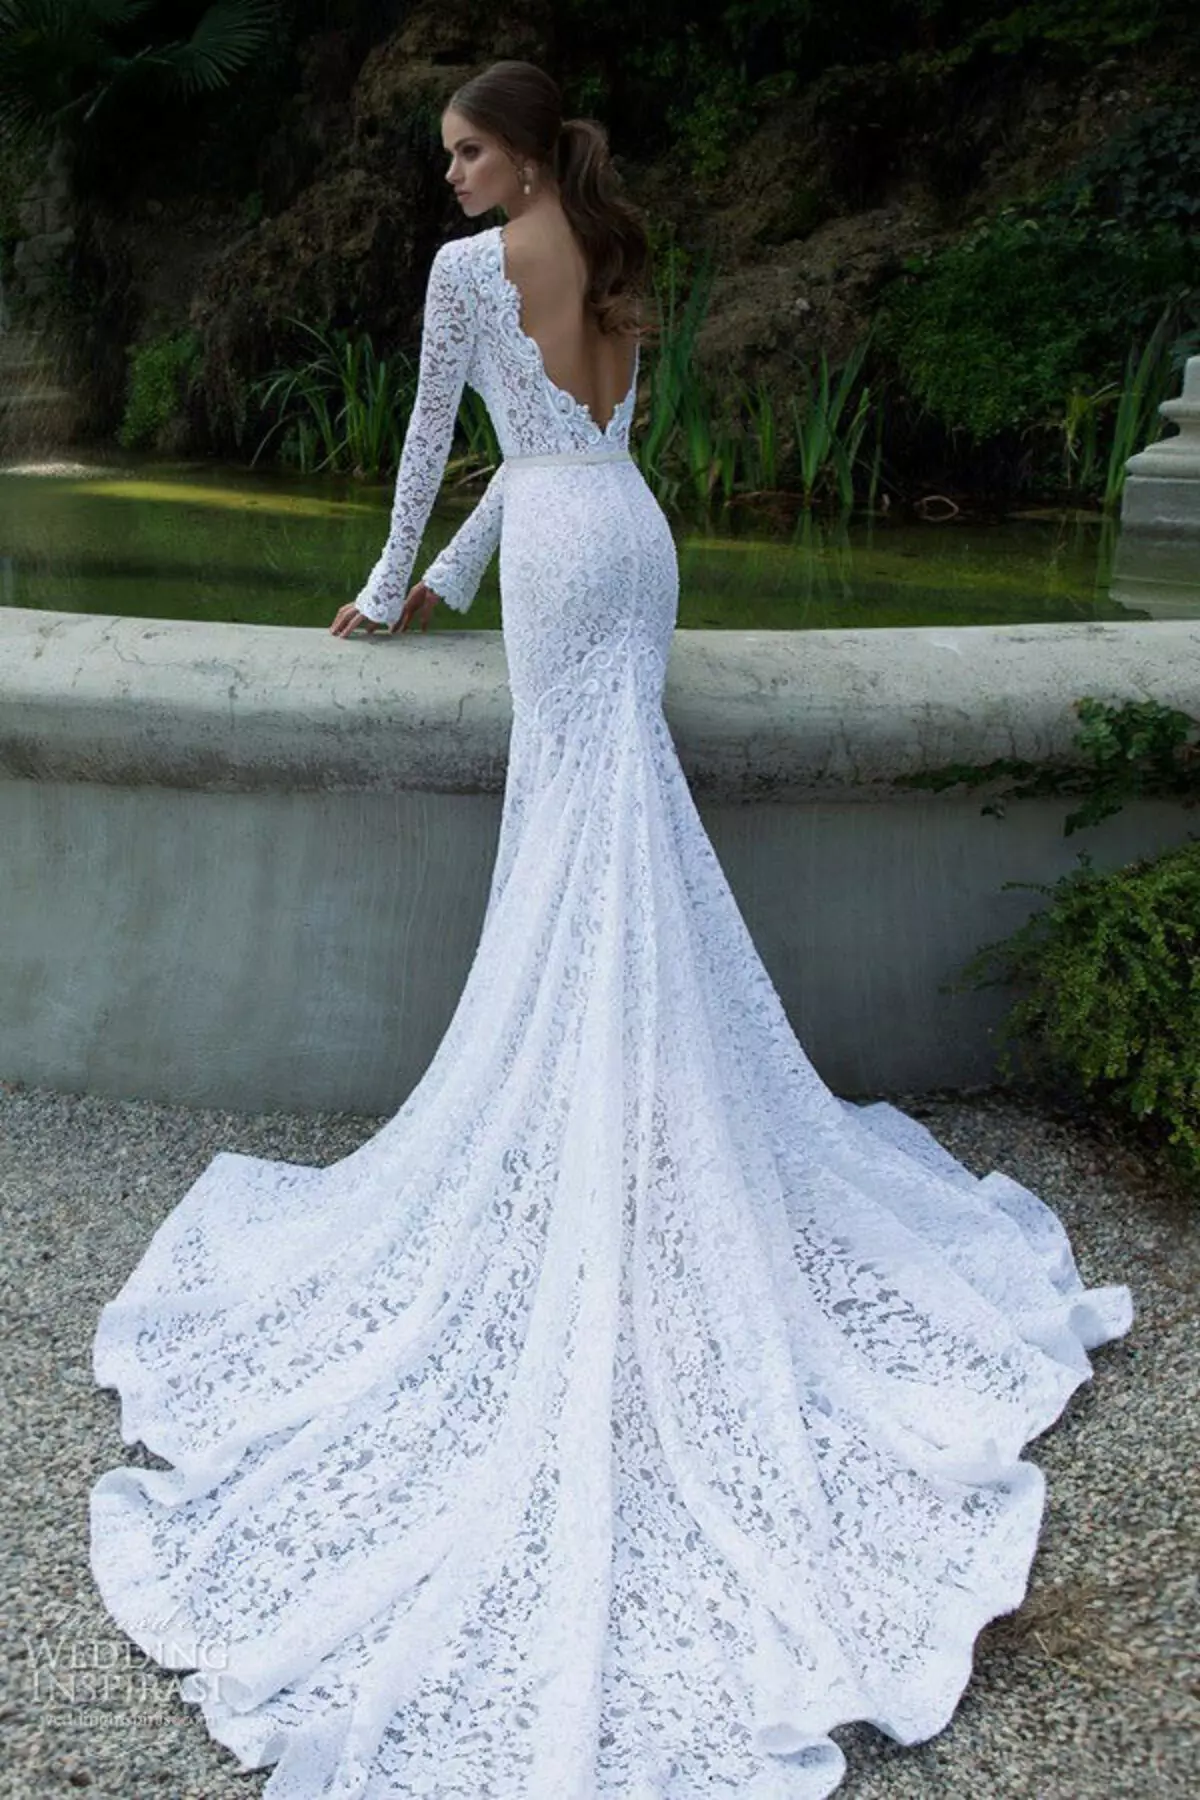 Lace loop wedding dress.